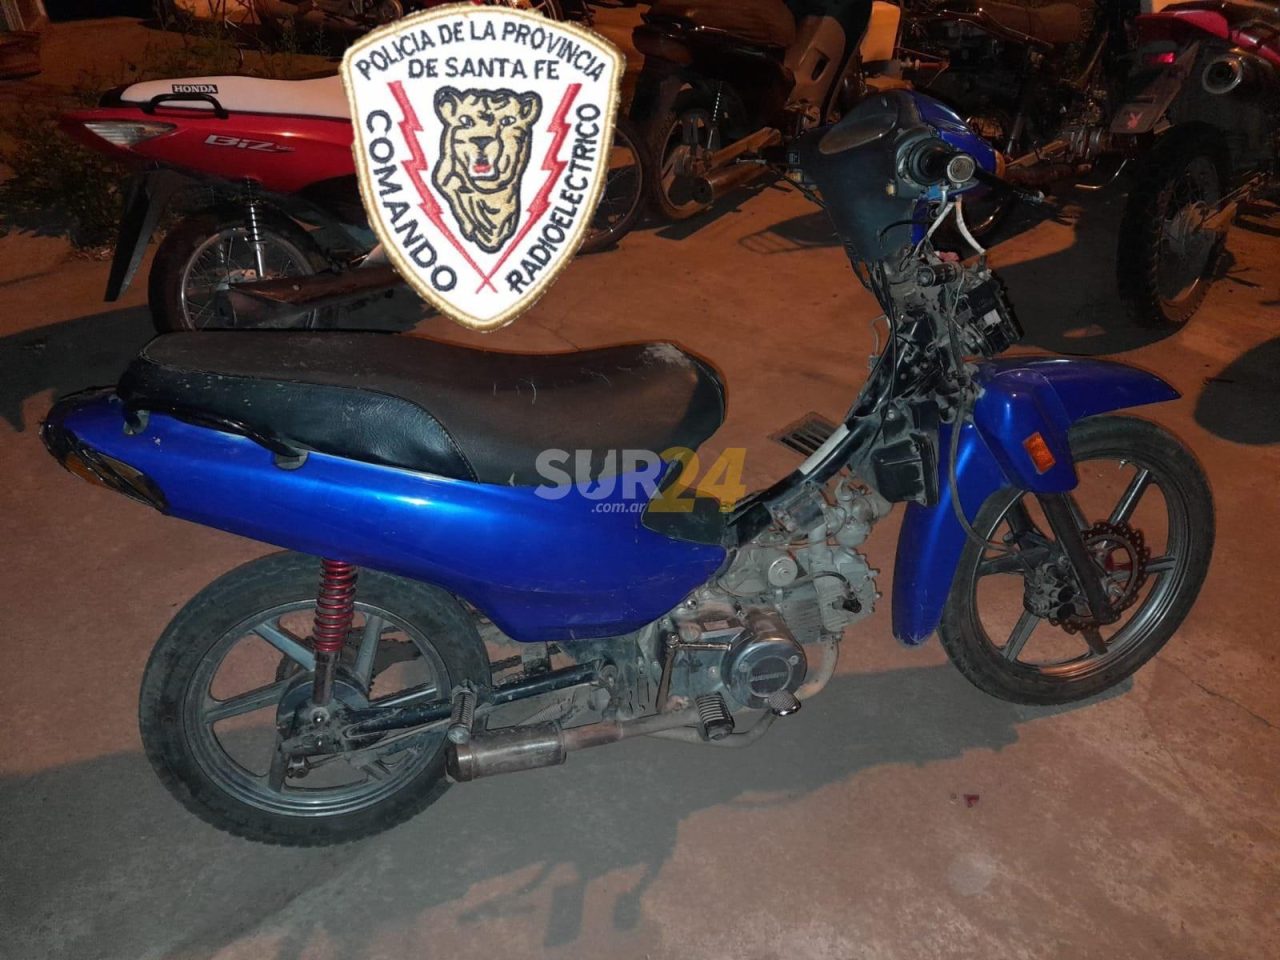 Dos menores detenidos en ruta 8 por circular en moto robada horas antes